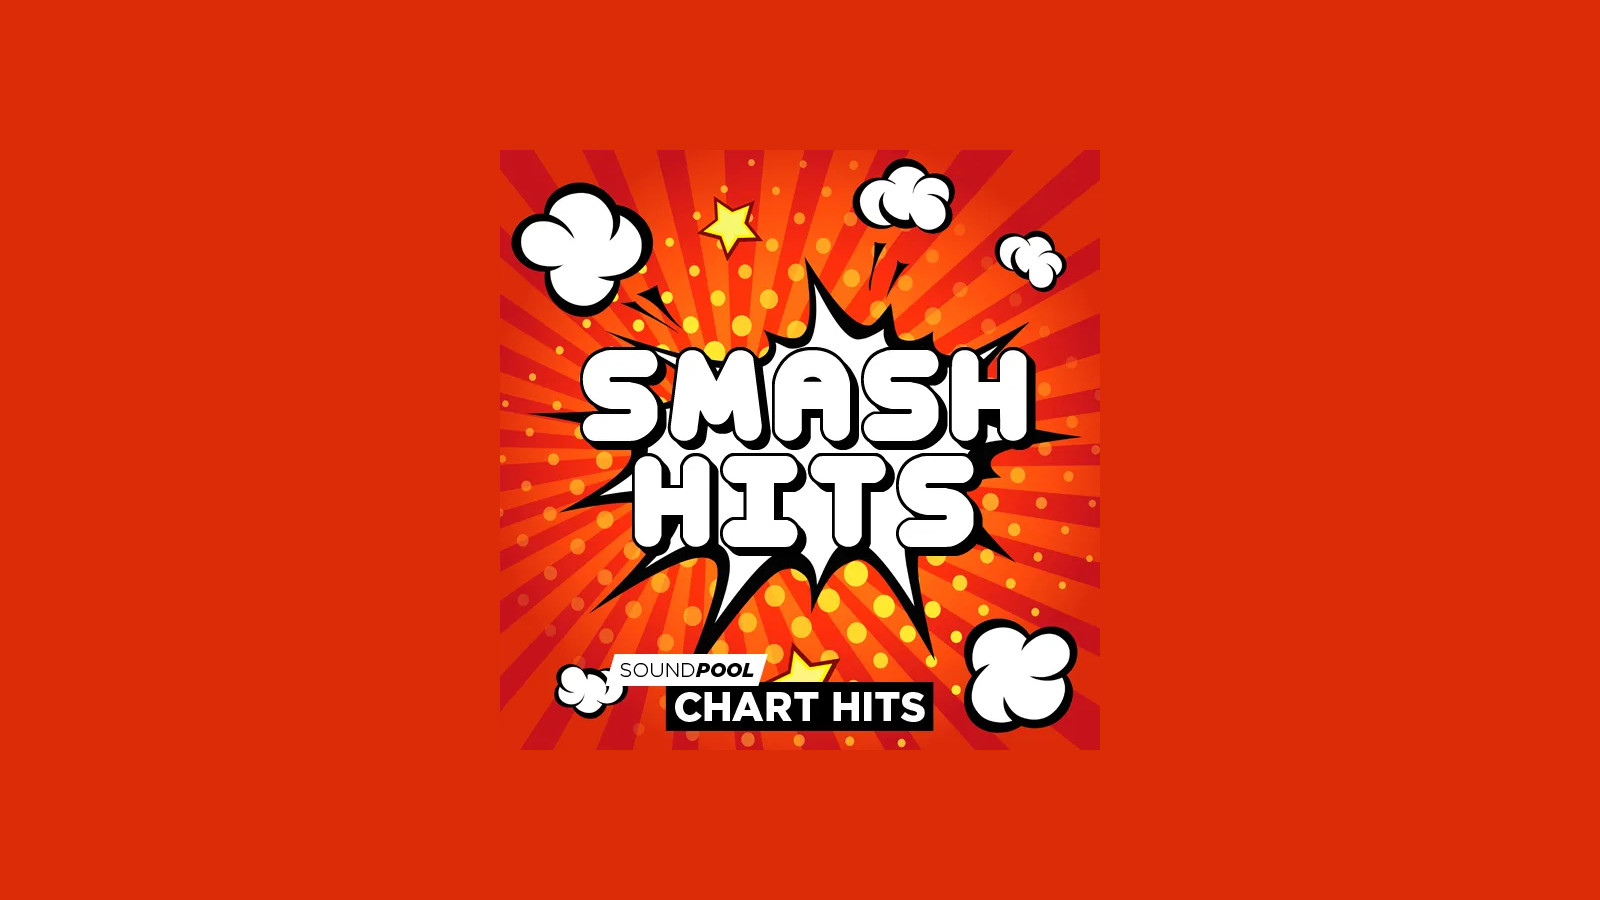 MAGIX Soundpool Smash Hits ProducerPlanet CD Key USD 5.65